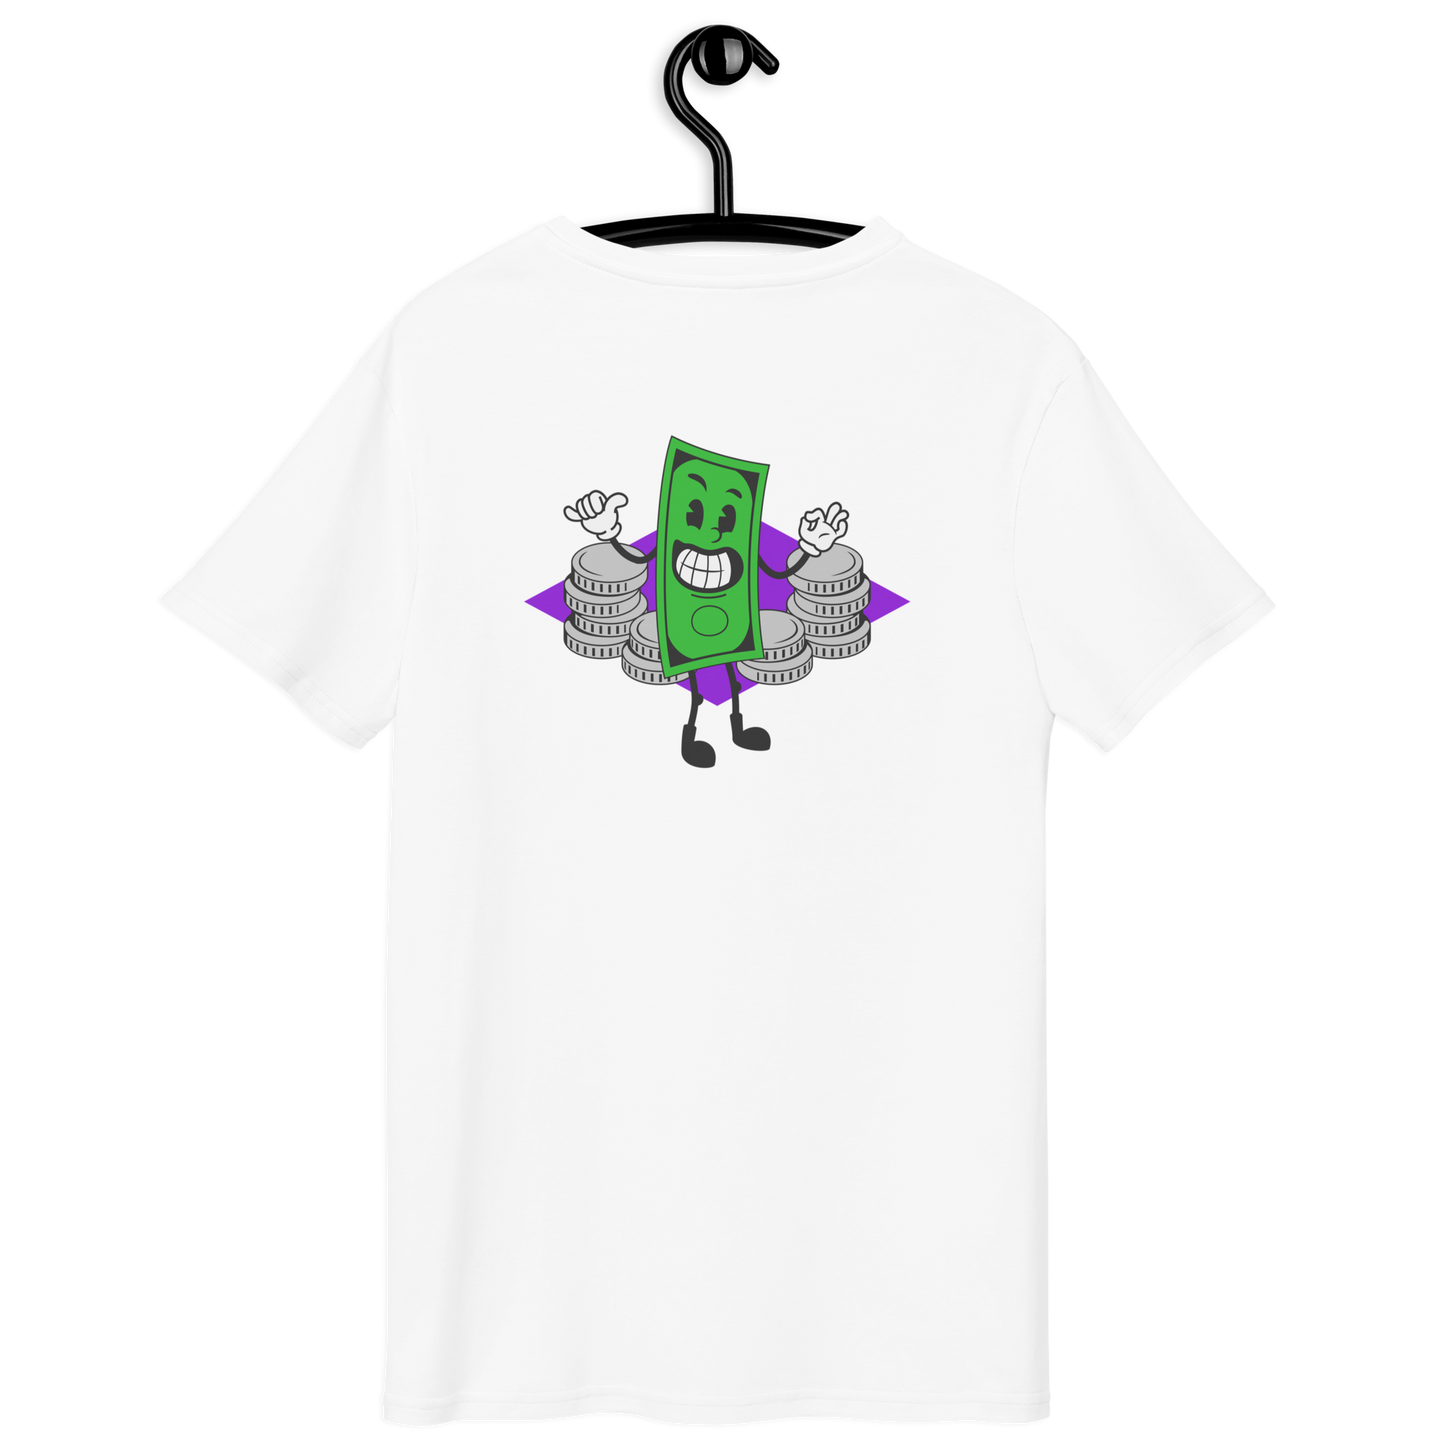 Turnt t-shirt (Purple edition)